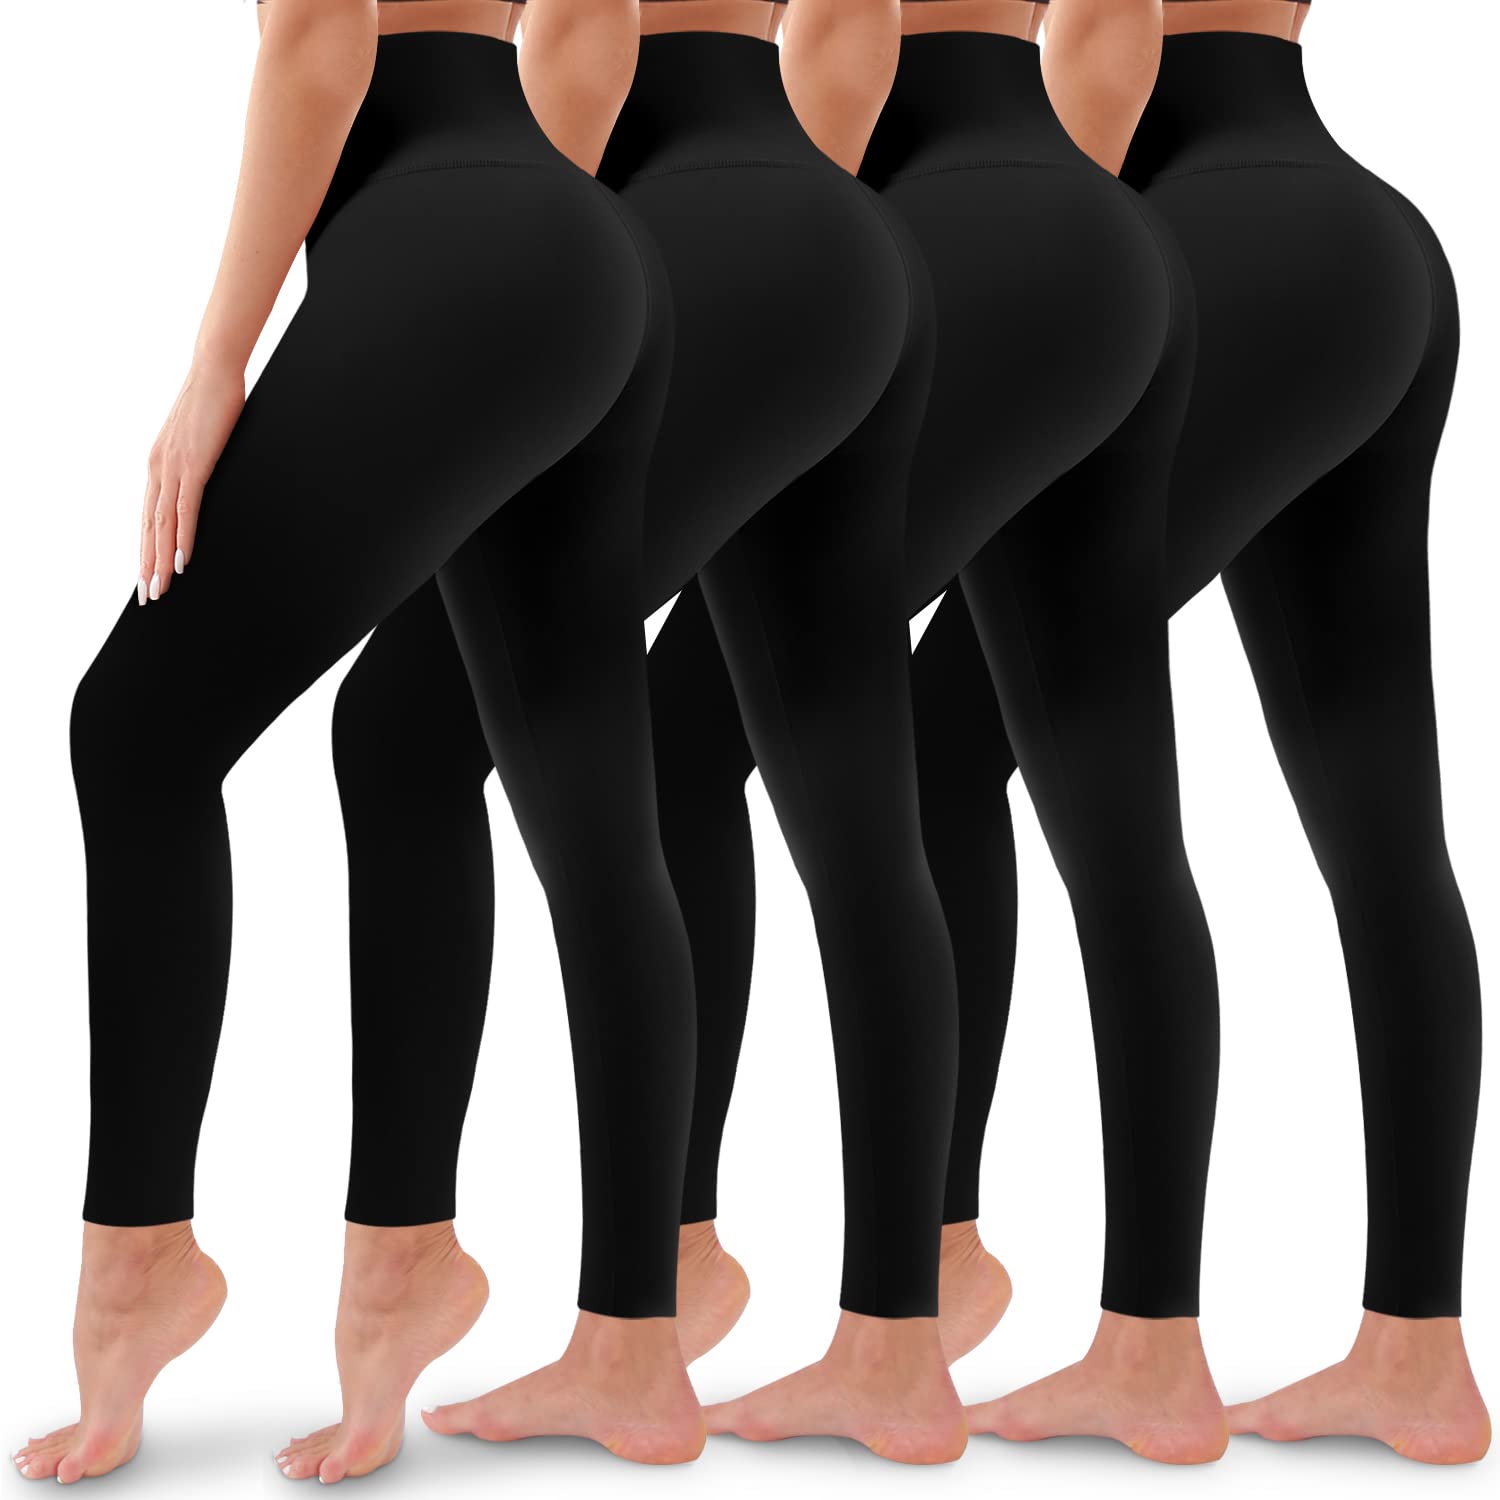 Women's High Waisted Tummy Control Seamless Leggings (2-Pack) 